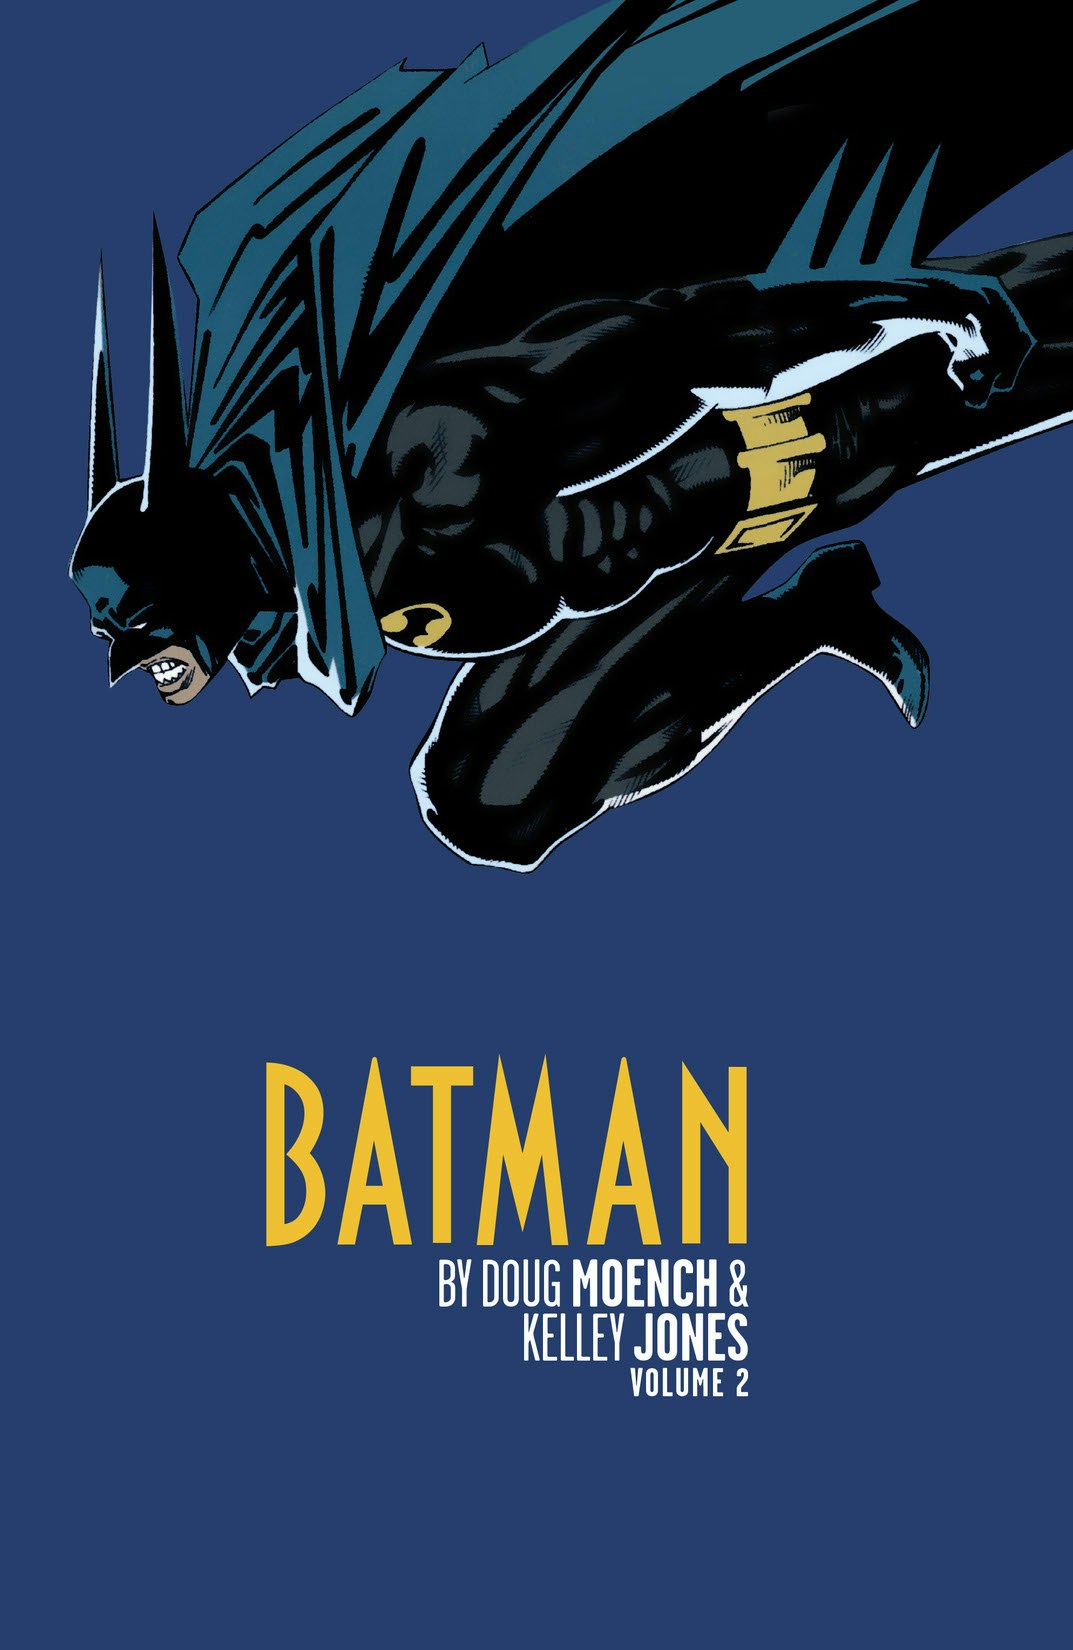 Batman by Doug Moench & Kelley Jones Vol. 2